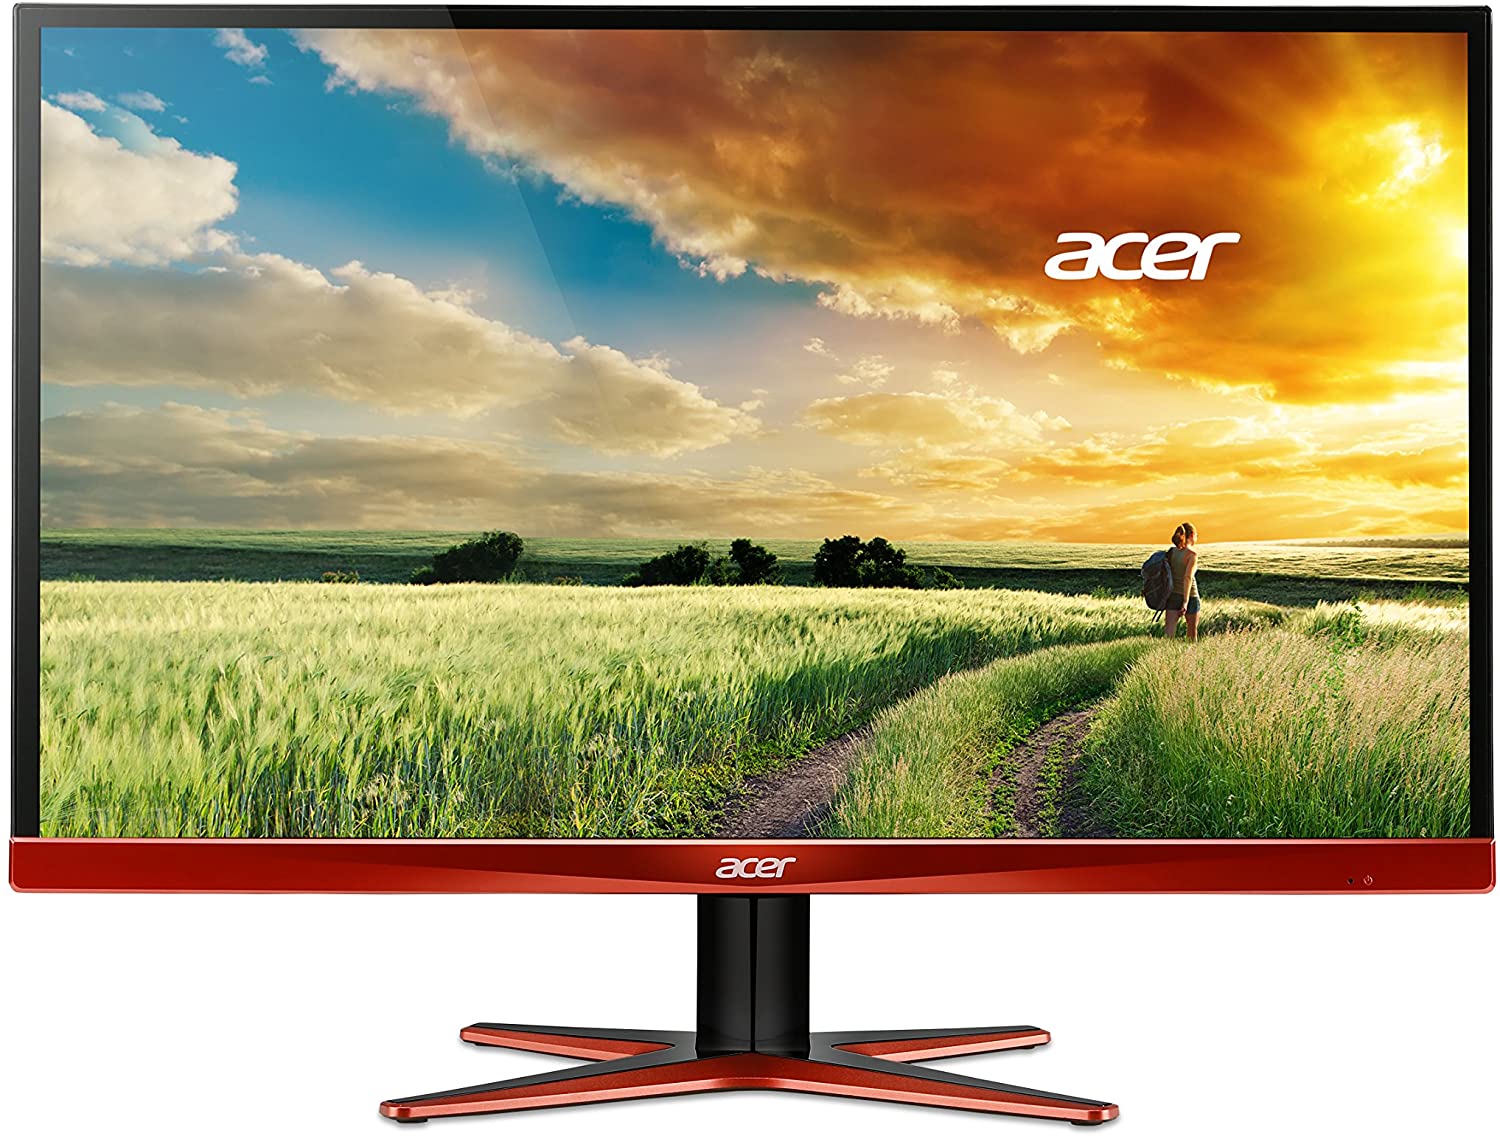 27" Acer XG270HU omidpx 144Hz 2560x1440 FreeSync Gaming Monitor $230 + free s/h at Amazon